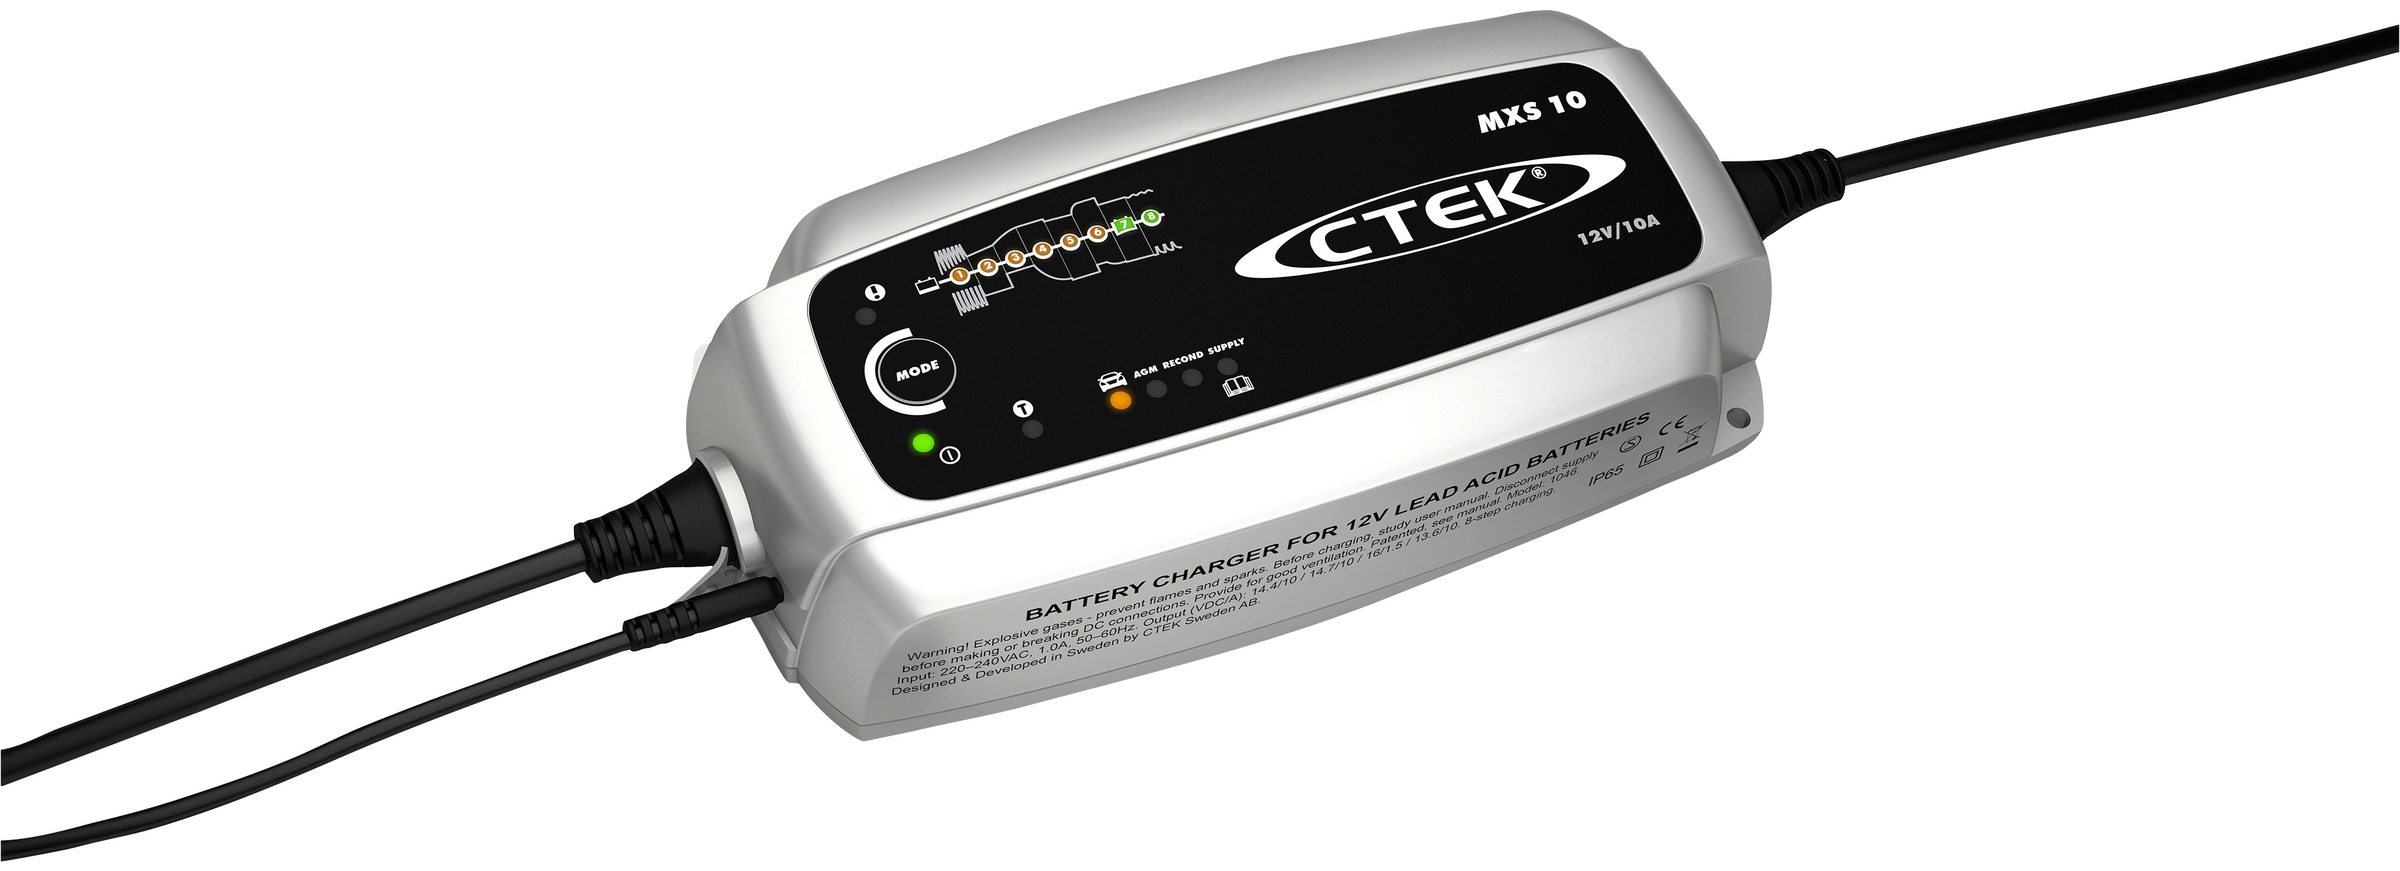 CTEK Batterie-Ladegerät »MXS 10«, Versorgungsprogramm / Supply